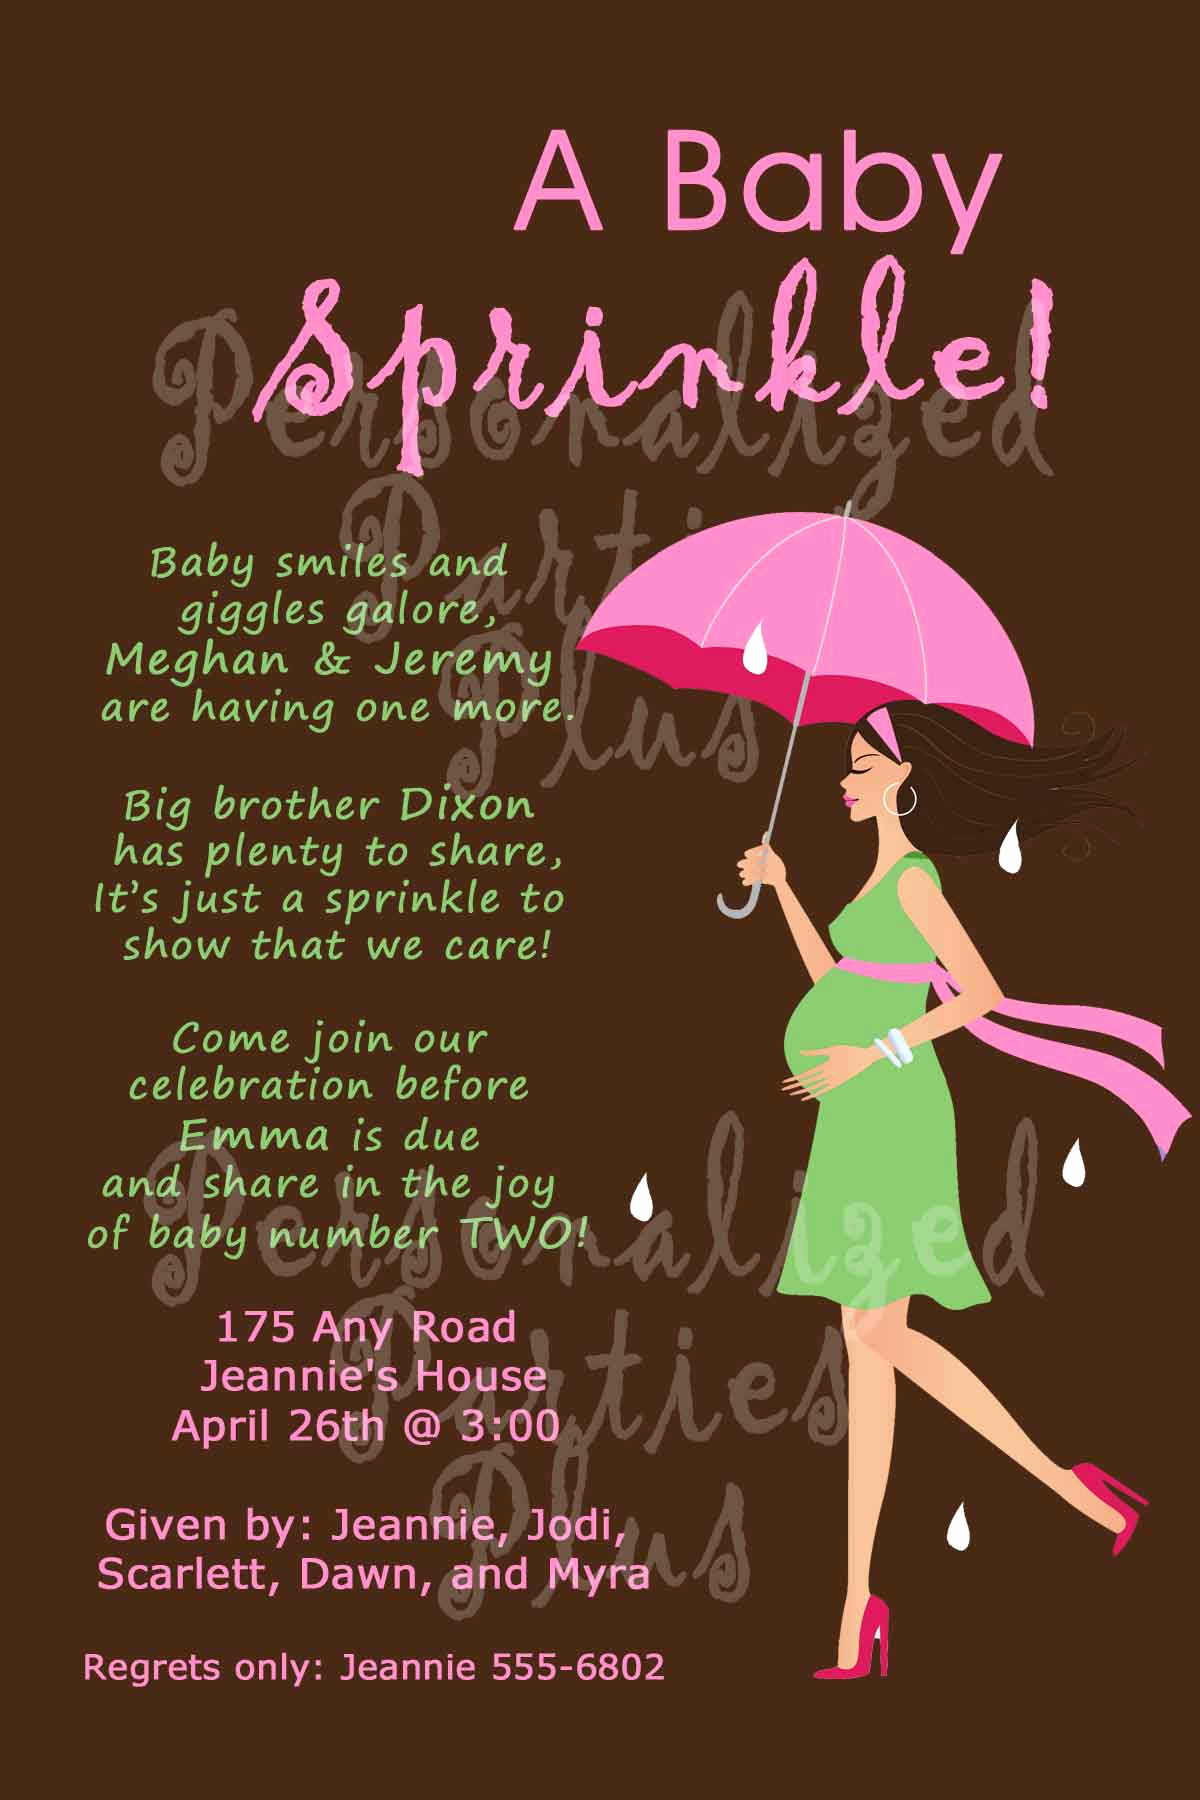 Second Baby Shower Invitation Wording Beautiful Baby Sprinkle Invitation for Second Baby